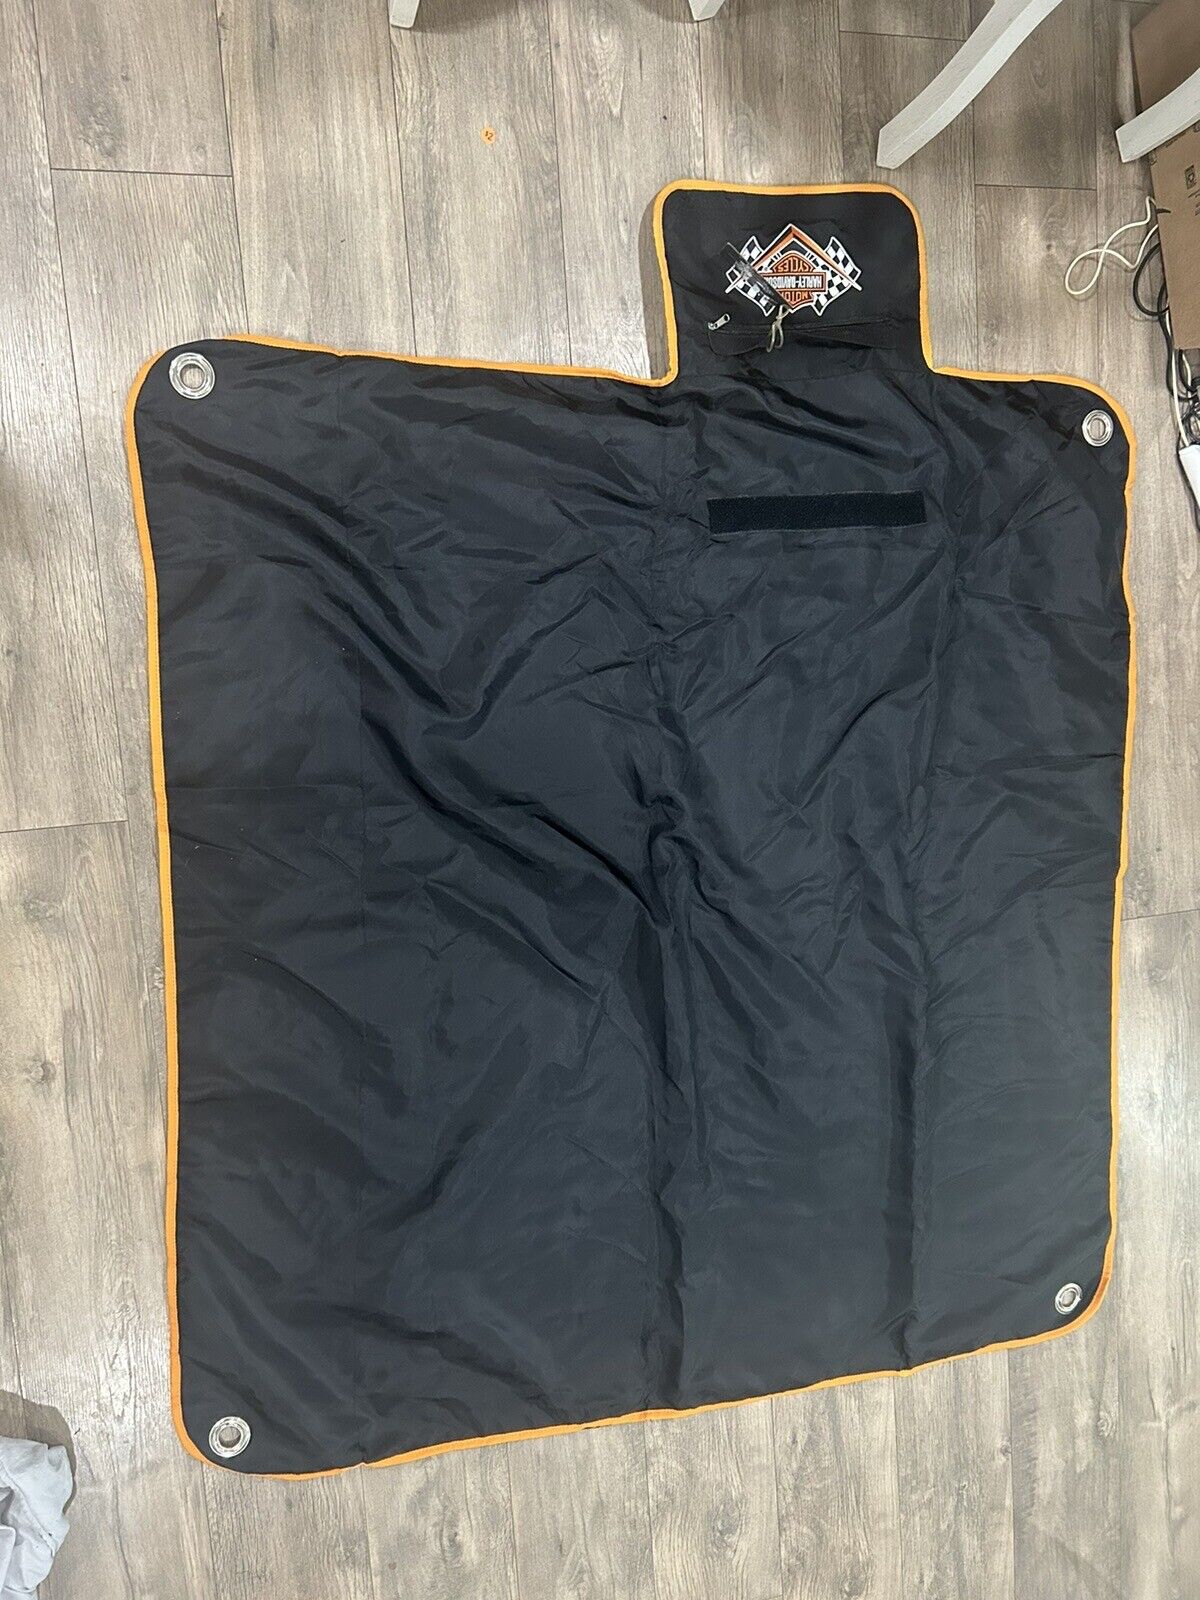 Harley Davidson Motorcycle Black Roll Up Blanket Tarp Fleece Lined  54 X 53